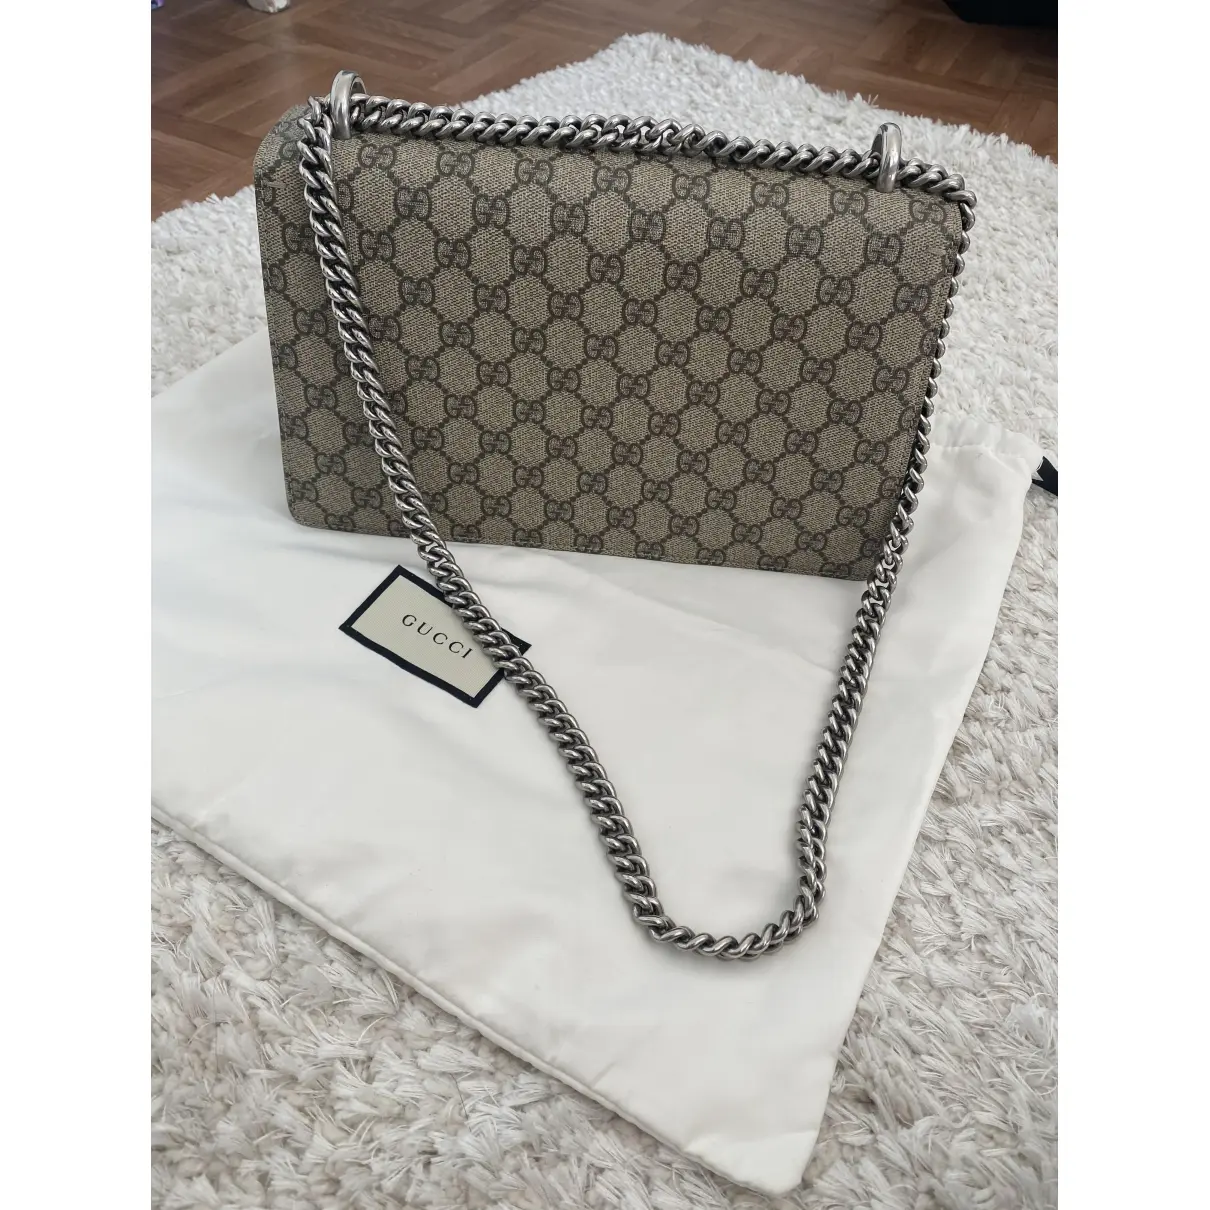 Buy Gucci Dionysus Chain Wallet cloth crossbody bag online